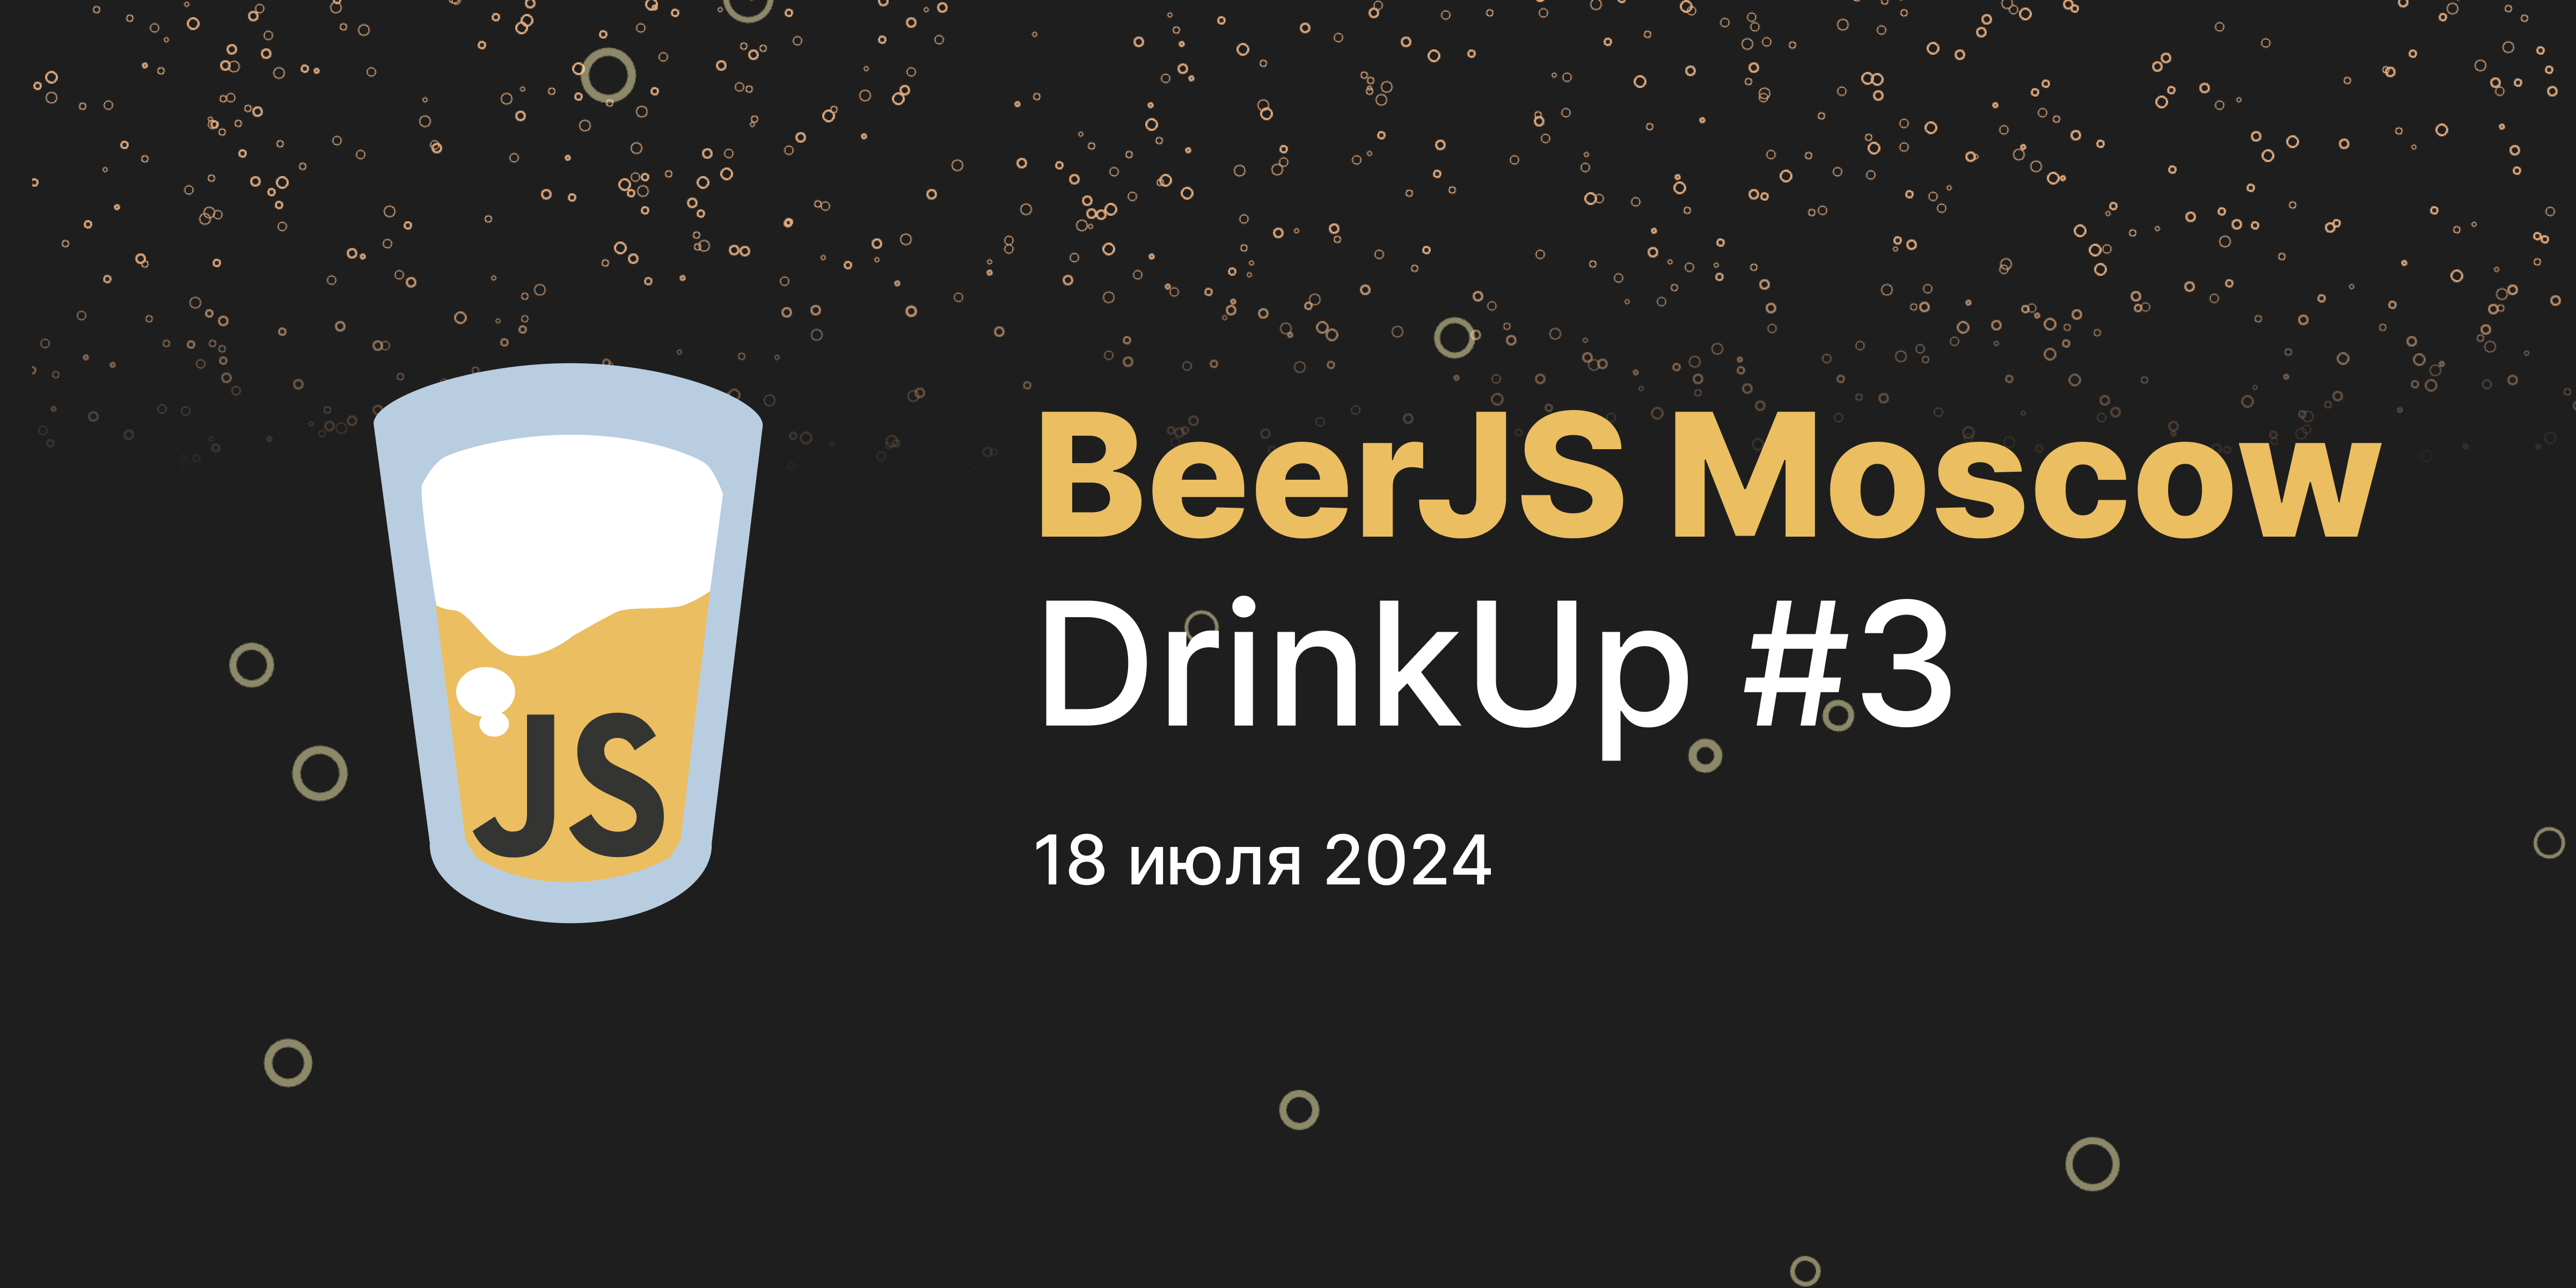 Обложка мероприятия BeerJS Moscow DrinkUp #3